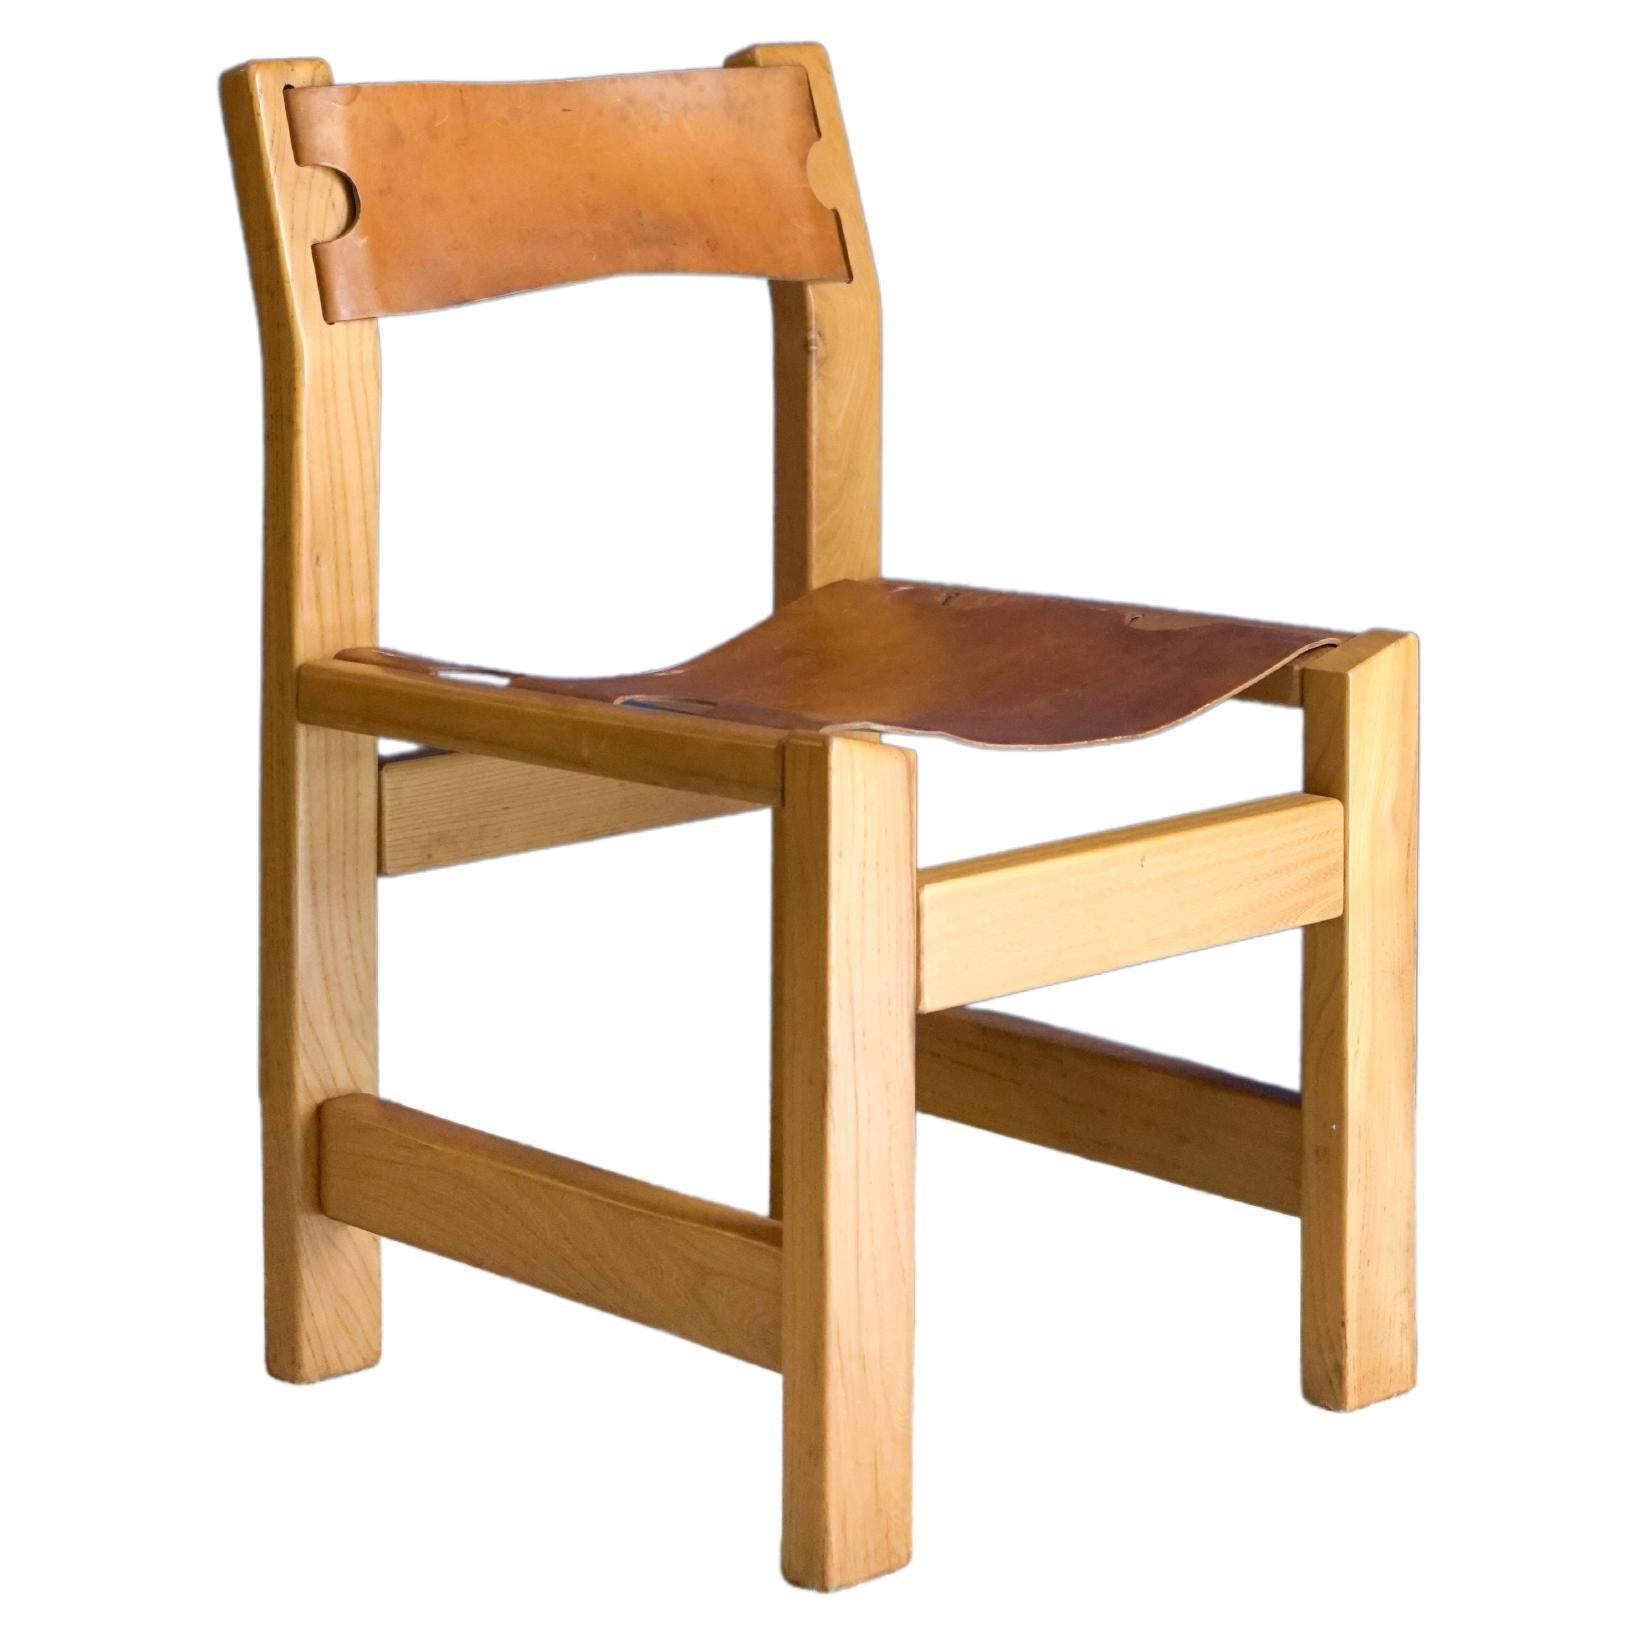 Chairs by Maison Regain